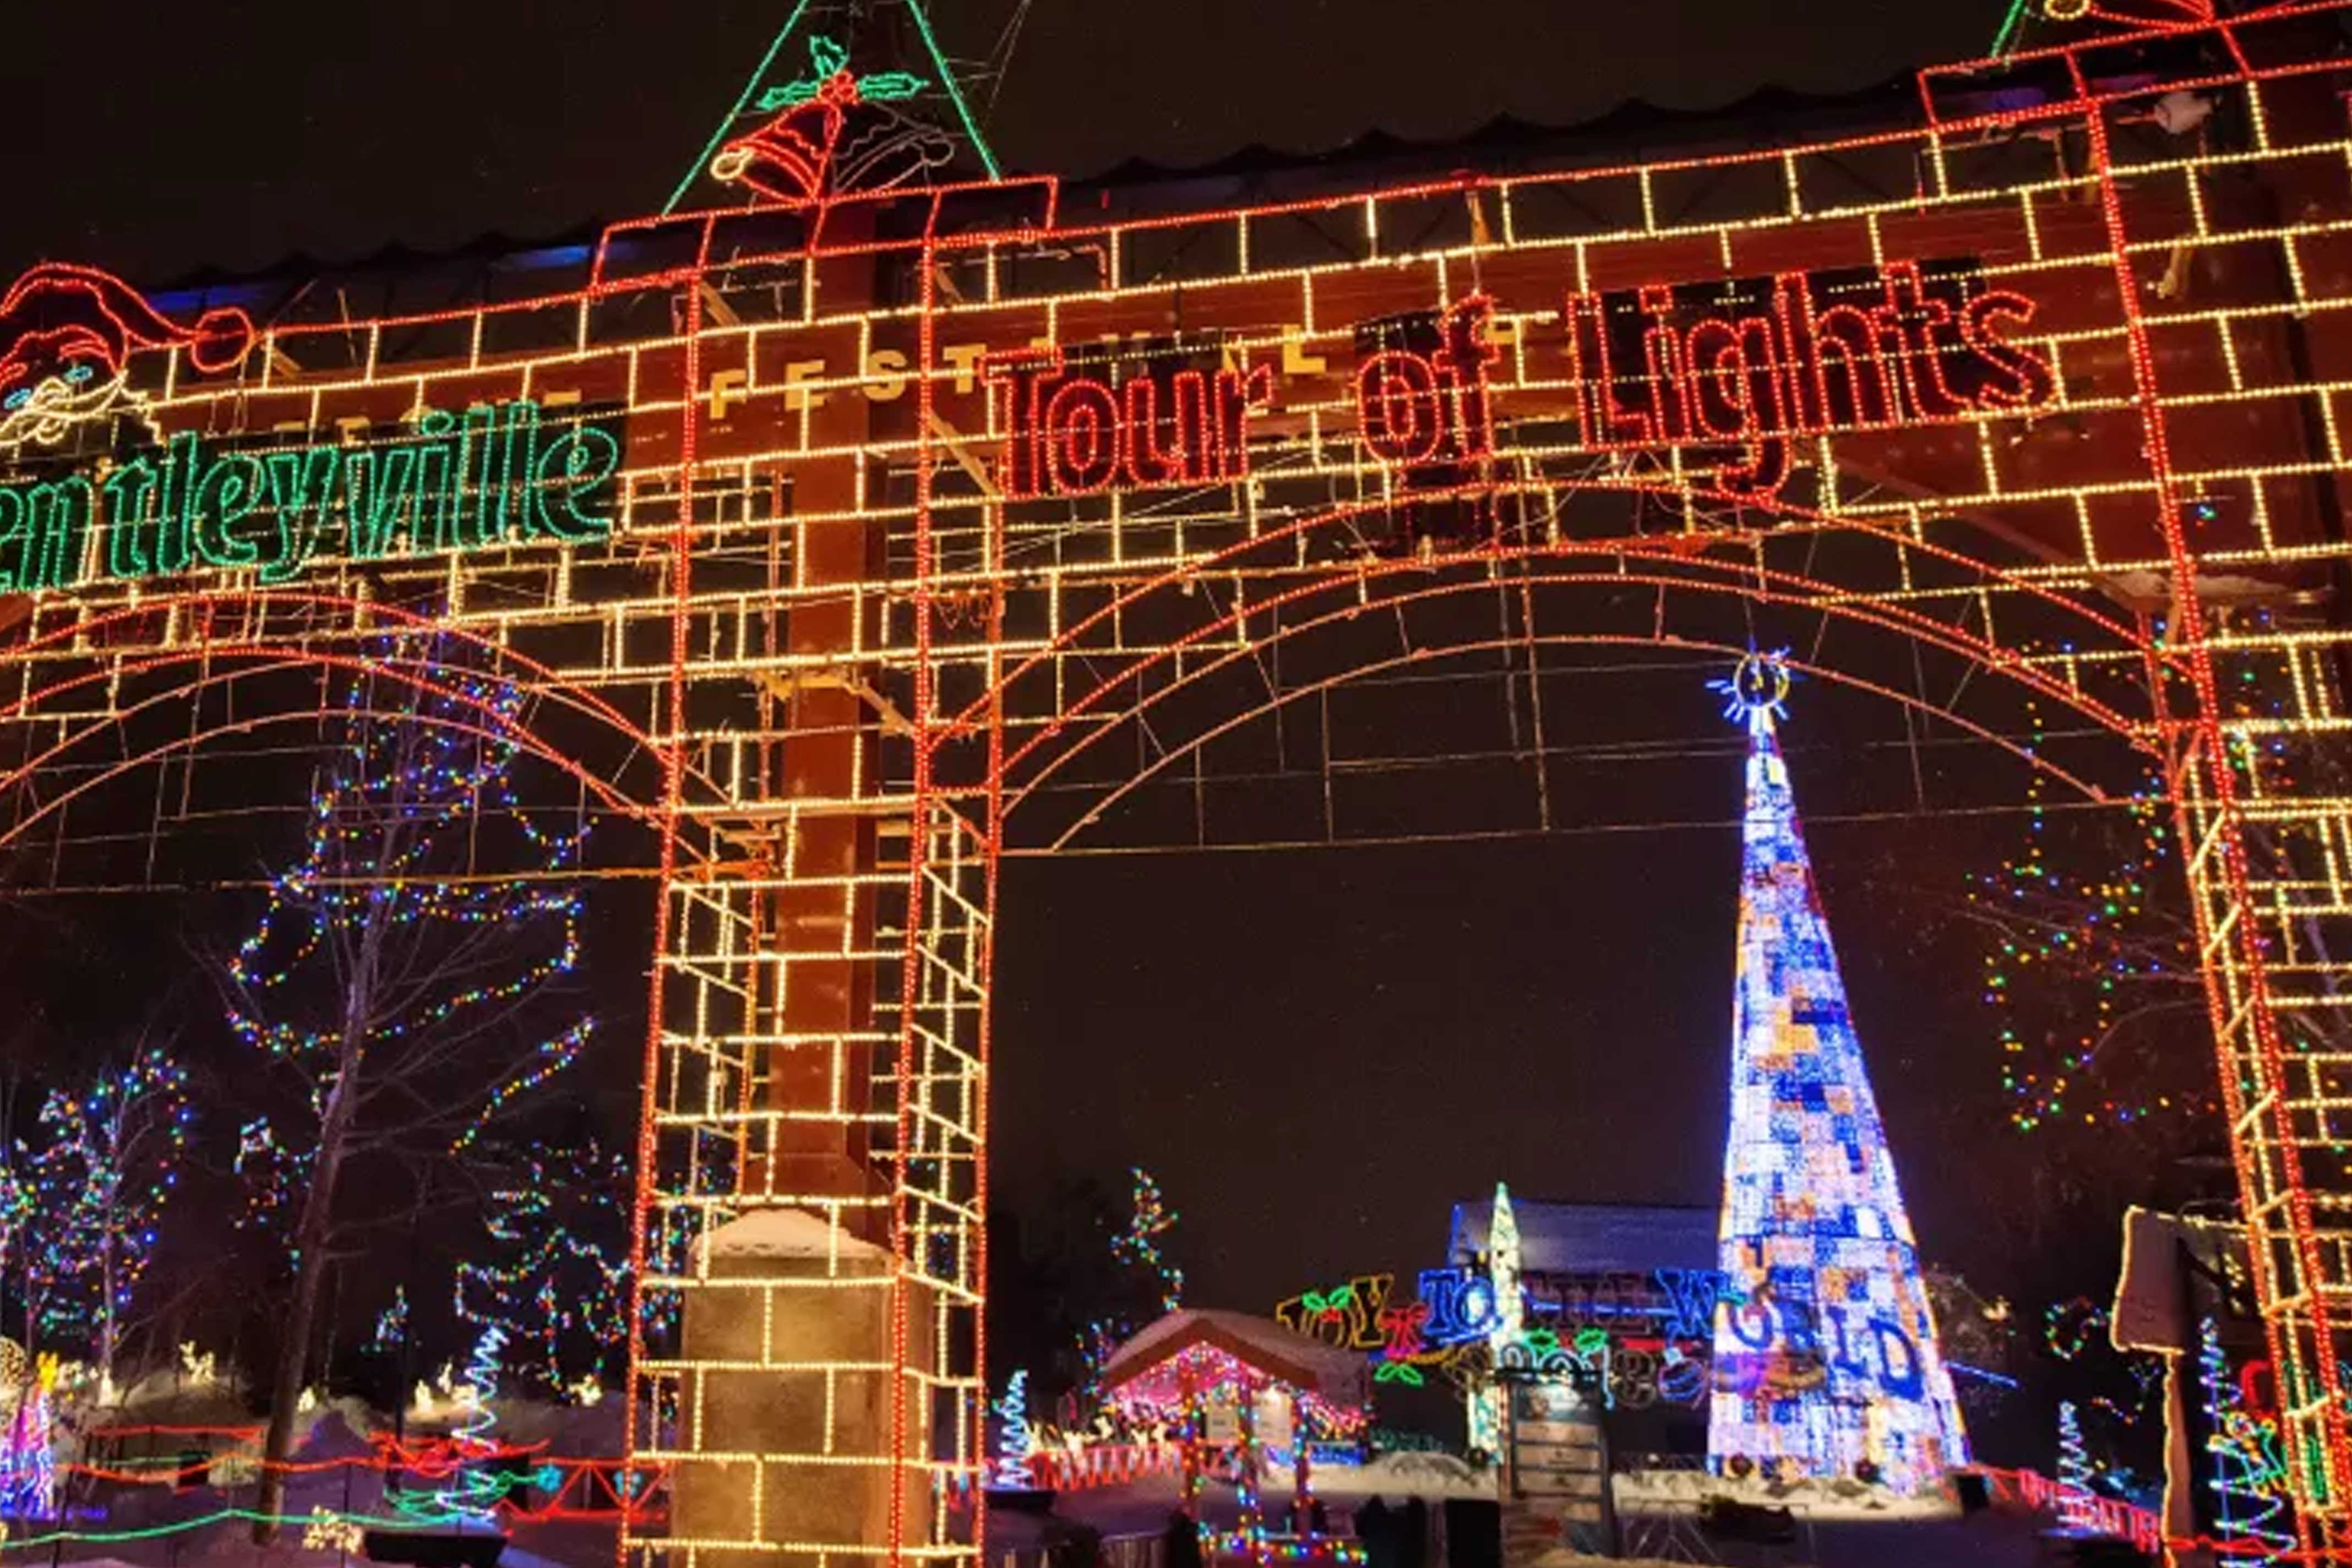 Bentleyville Duluth, Minnesota "Tour of Lights" Christmas Display